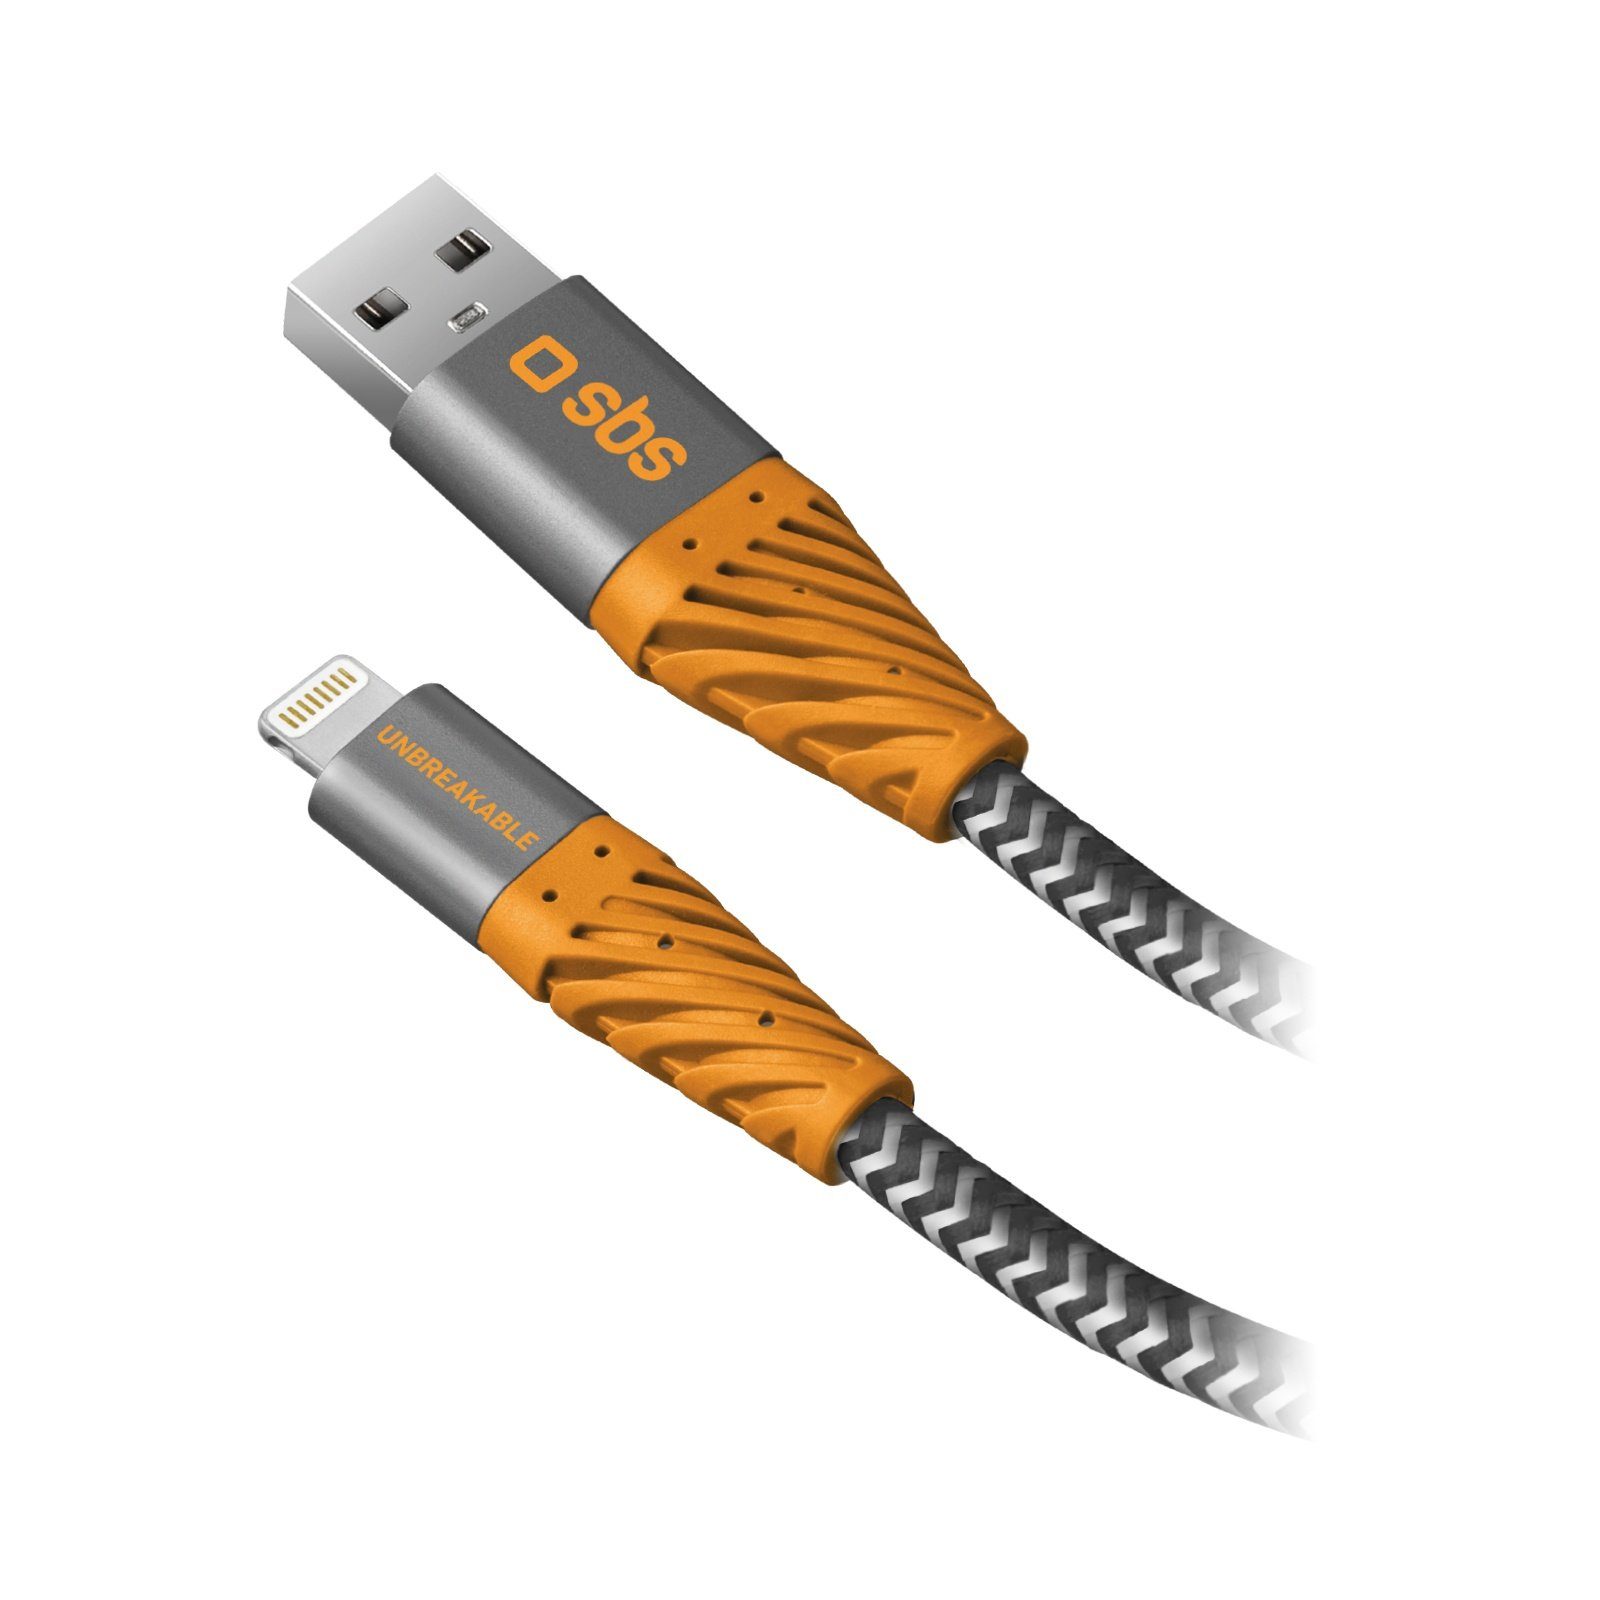 sbs SBS Lightning Ladekabel & Datenkabel für Apple iPhone & iPad, 2 Meter,  orange, 50.000-mal knickbeständig Smartphone-Kabel